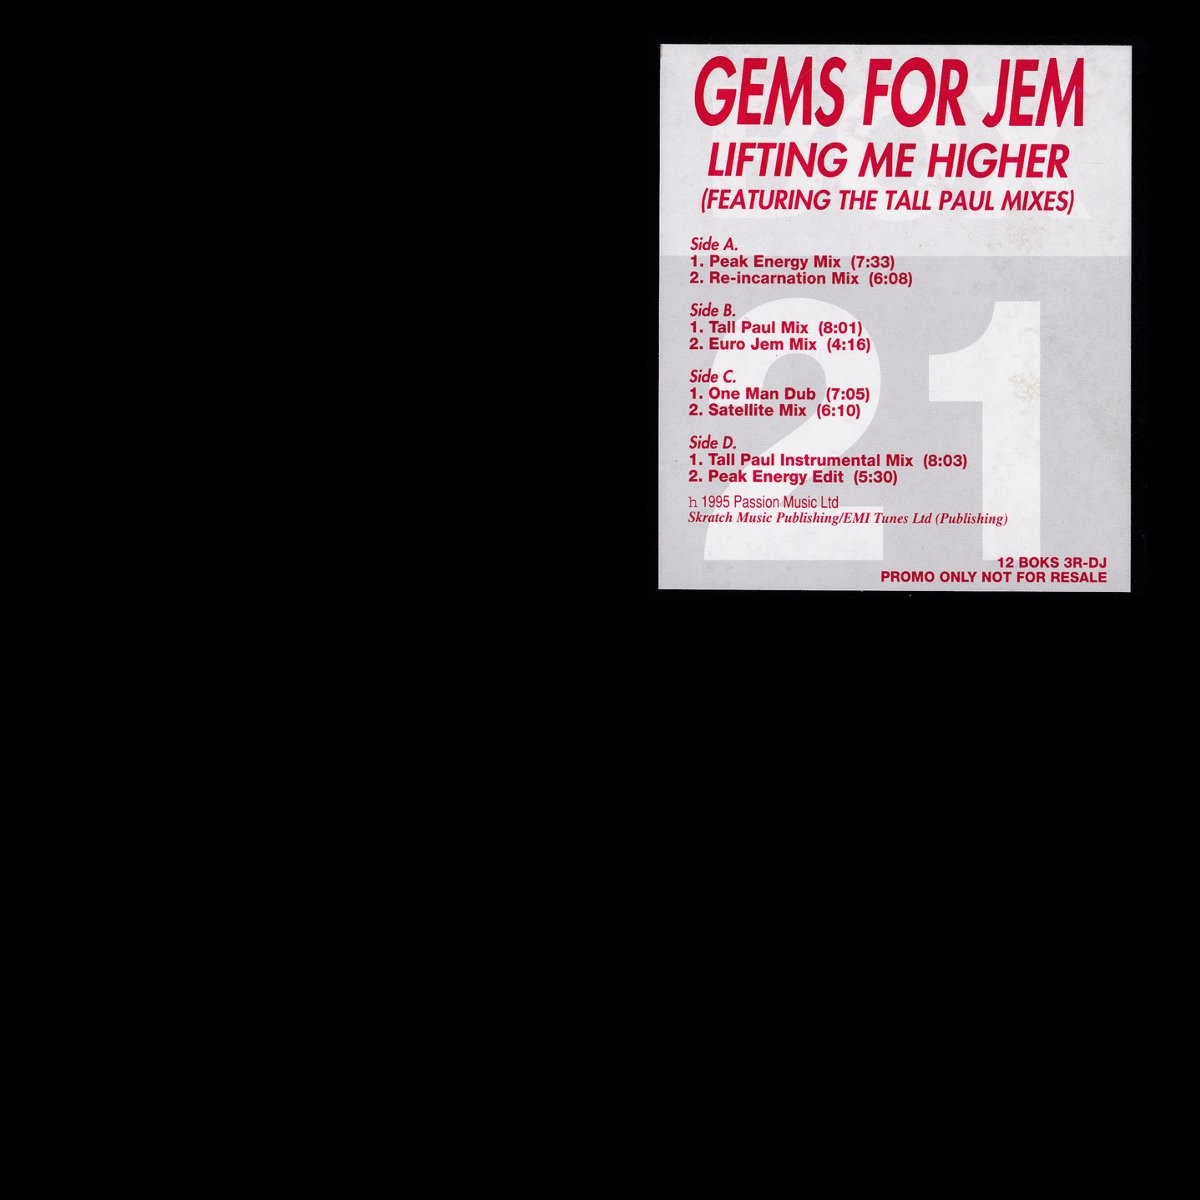 Gems For Jem - Lifting me higher (Tall Paul mix / Euro Jem mix / Peak Energy mix / Re-Incarnation mix / One Man Dub / Satellite